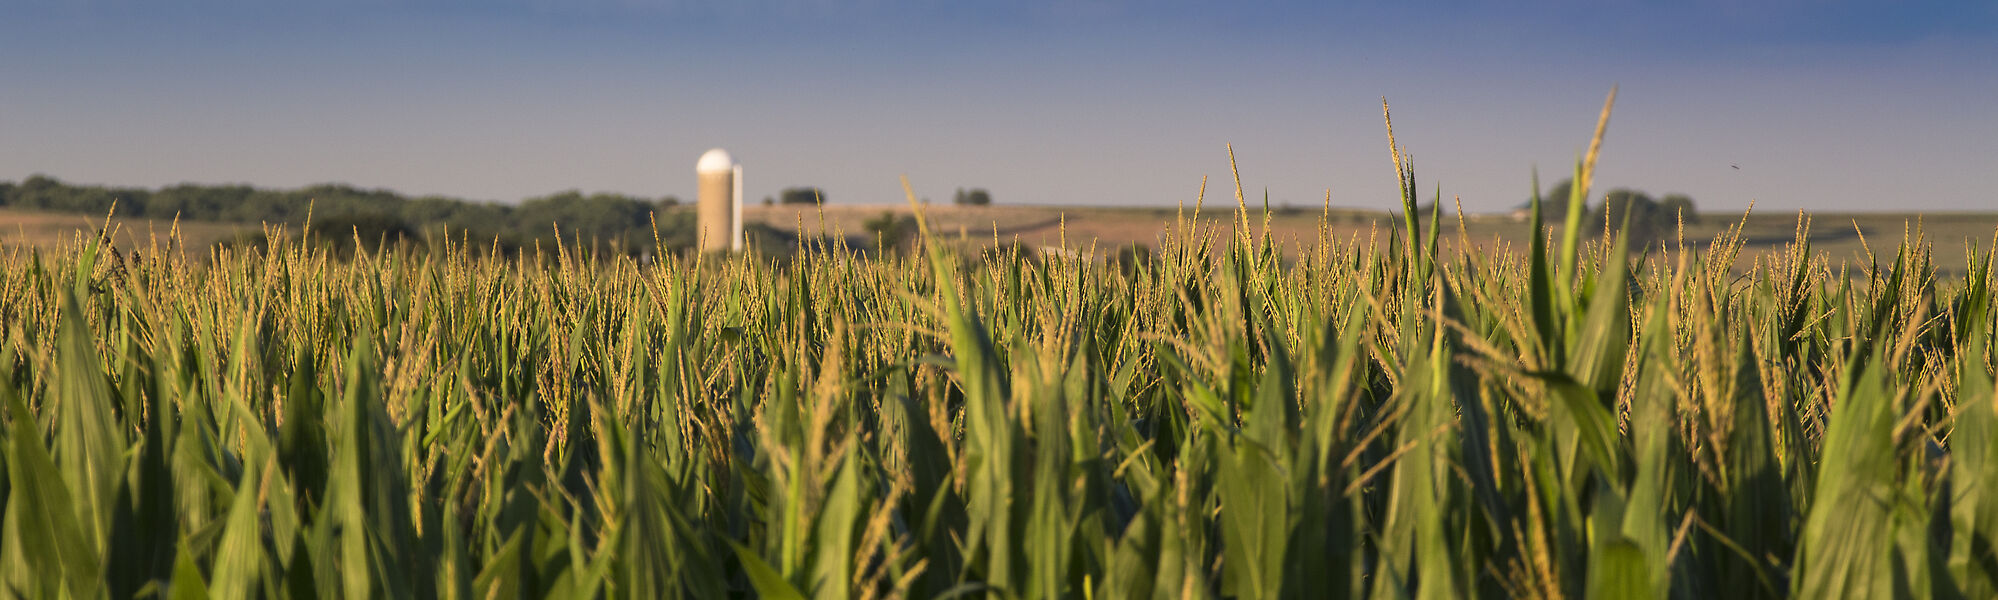 Nelson corn sprinkler irrigation system for farms